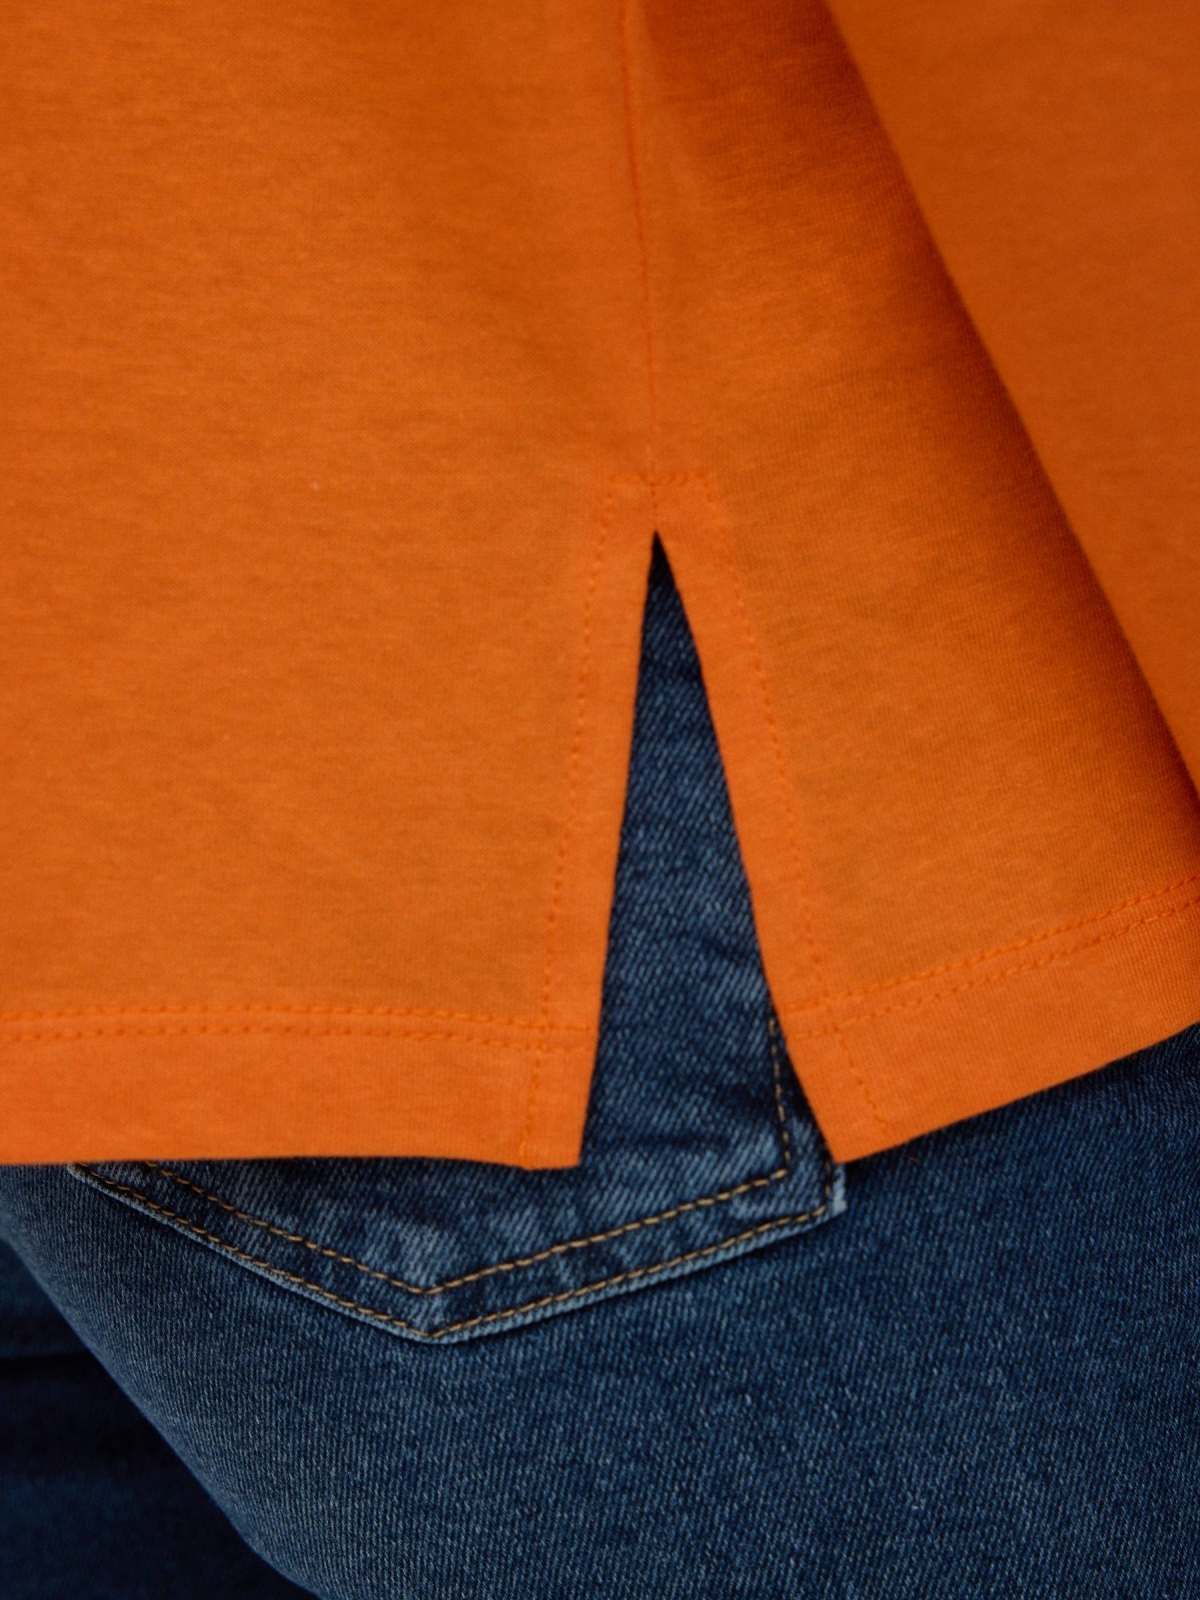 T-shirt with print orange detail view